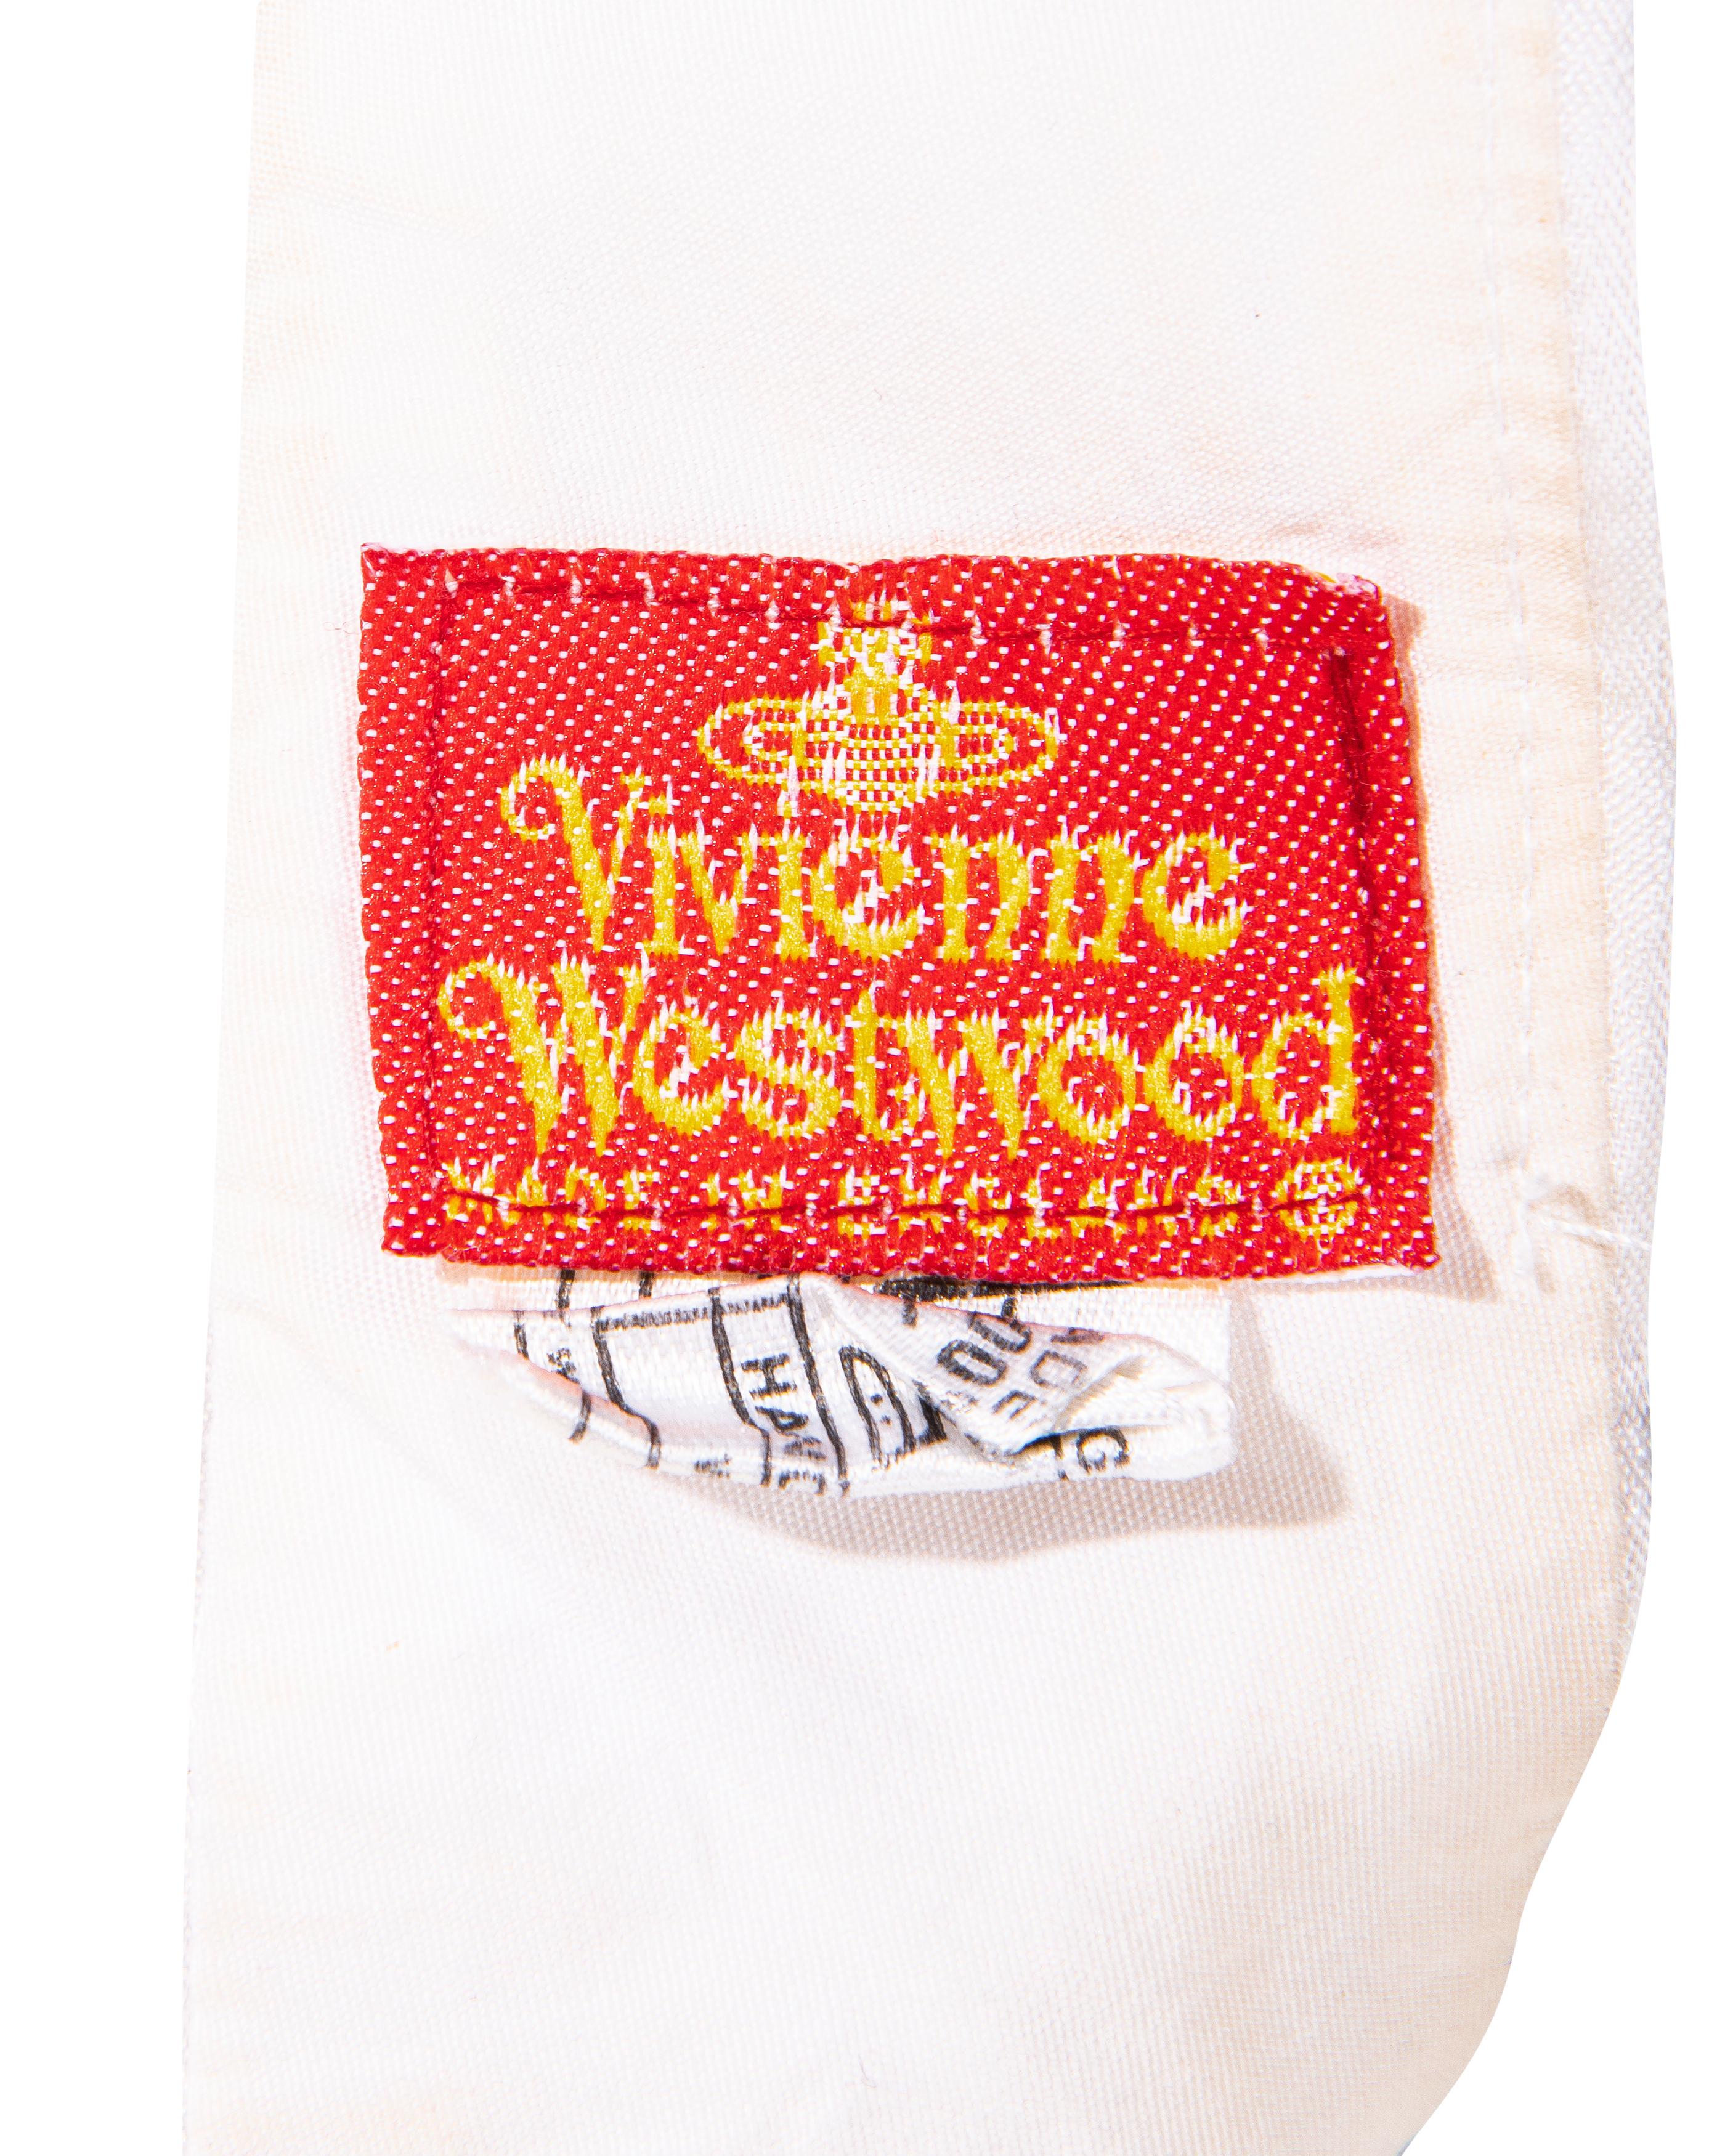 S/S 1991 Vivienne Westwood White Satin Corset 1